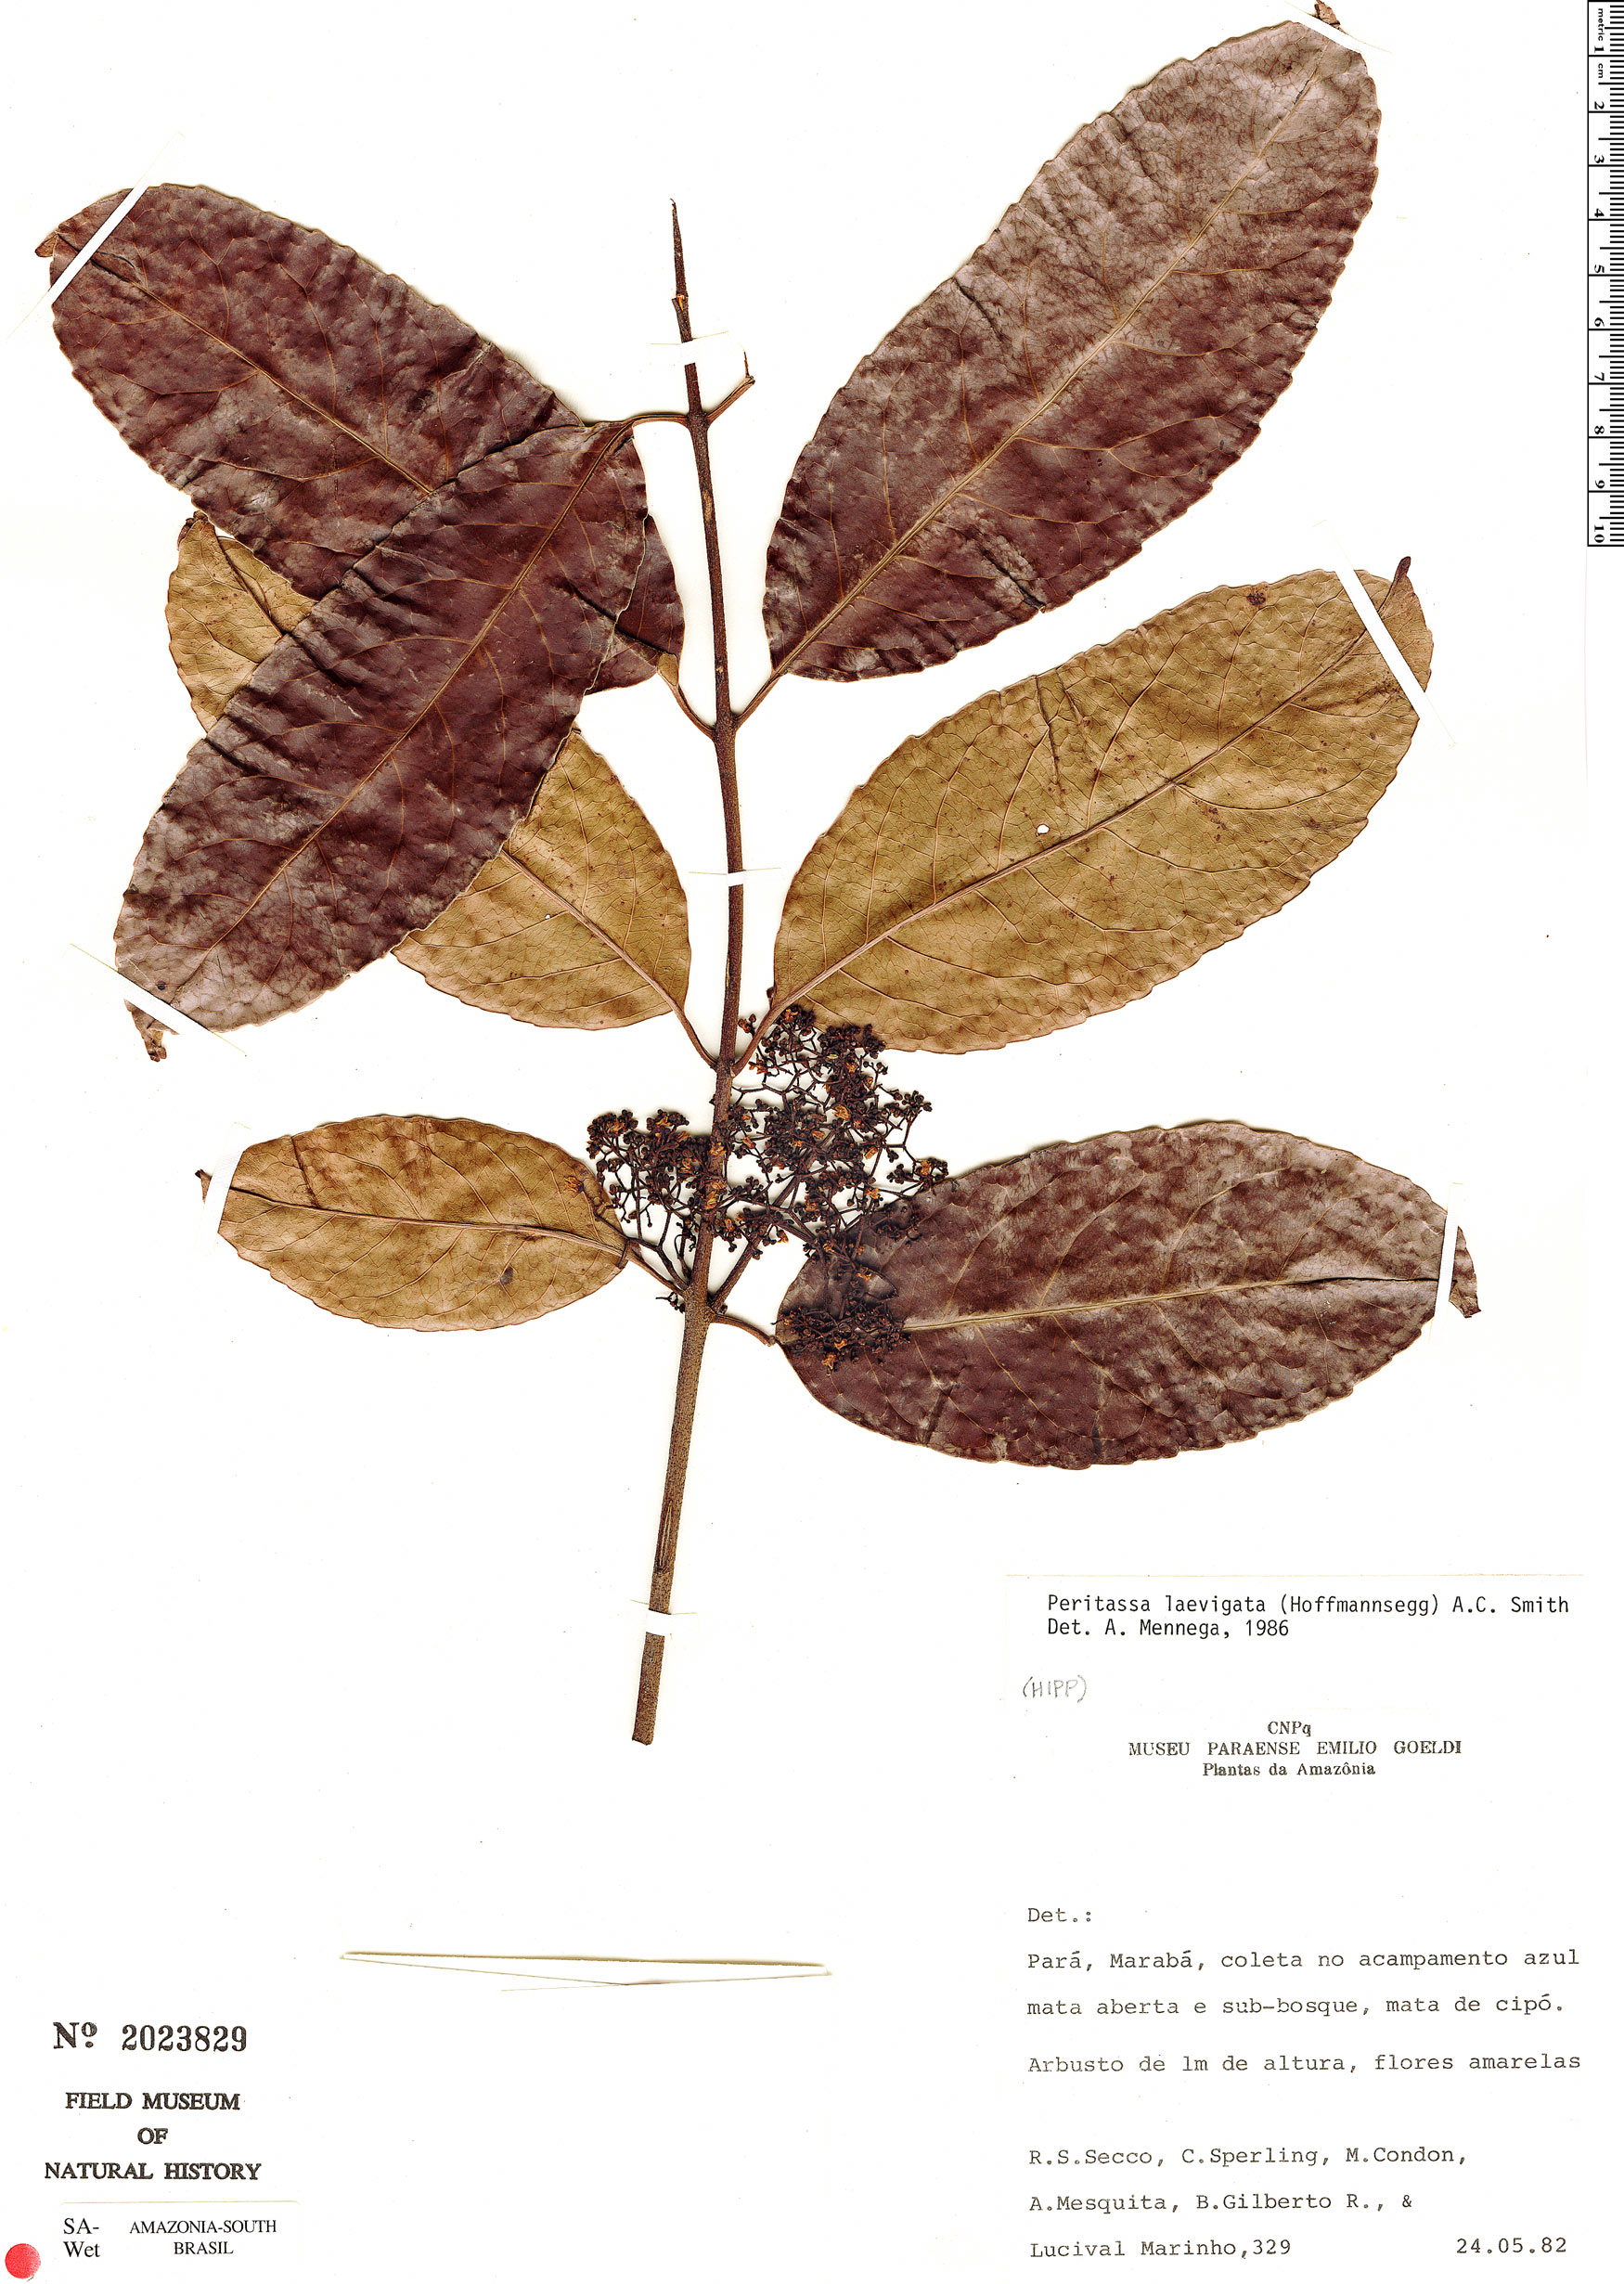 Peritassa laevigata | Herbário Rapid Reference | The Field Museum